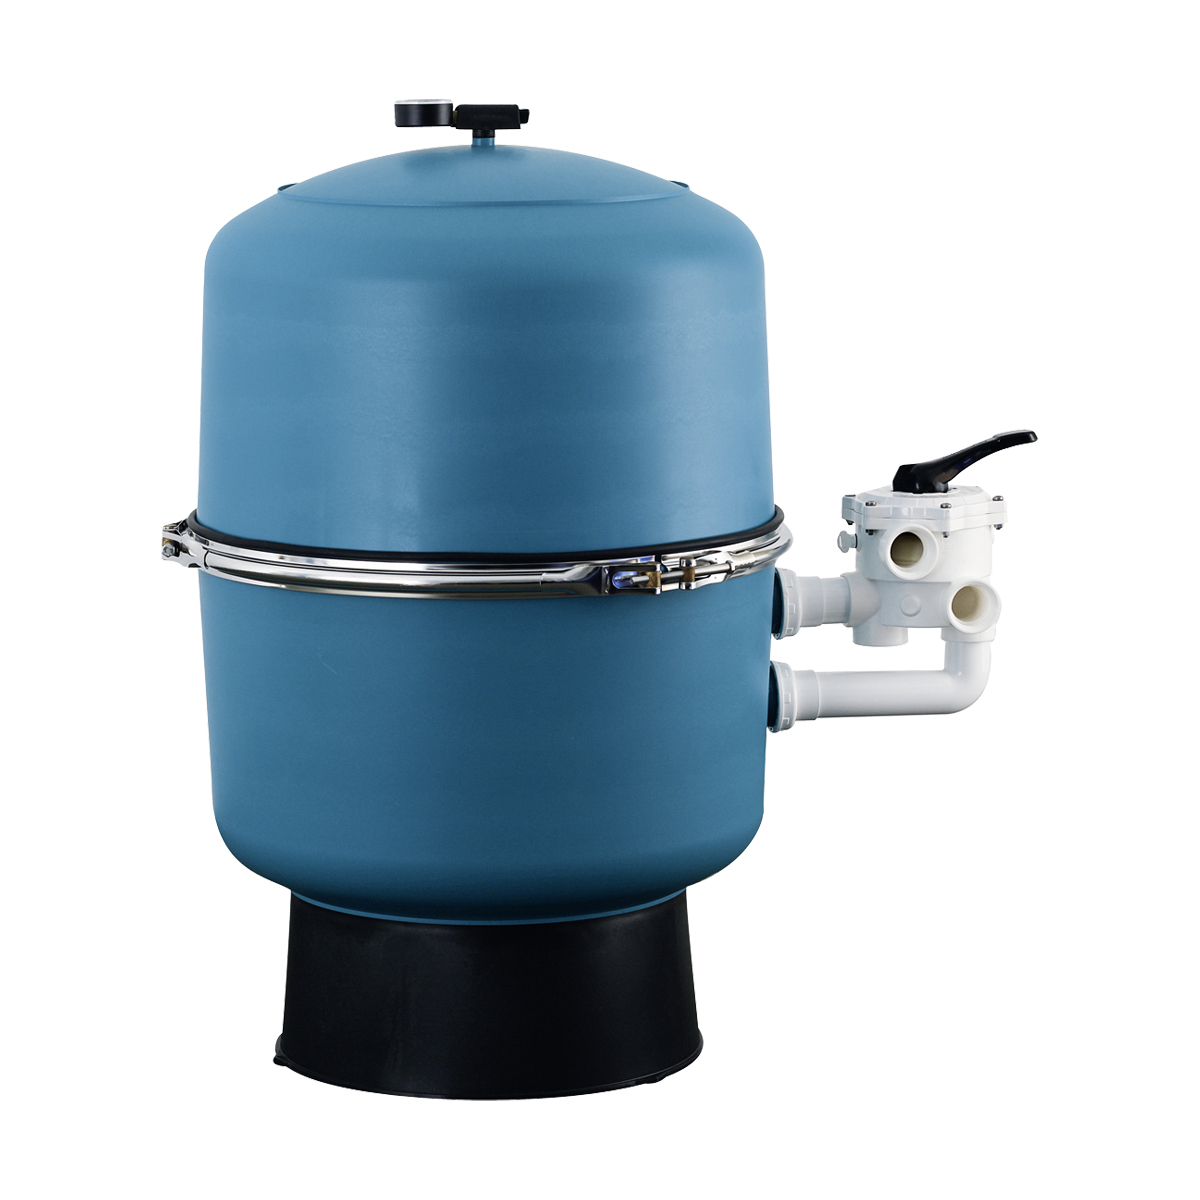 Filter GRAZ d500 blue, side mount with original Praher  1 1/2" 6 way valve, manual Filter GRAZ d500 blue, side mount with original Praher  1 1/2" 6 way valve, manual